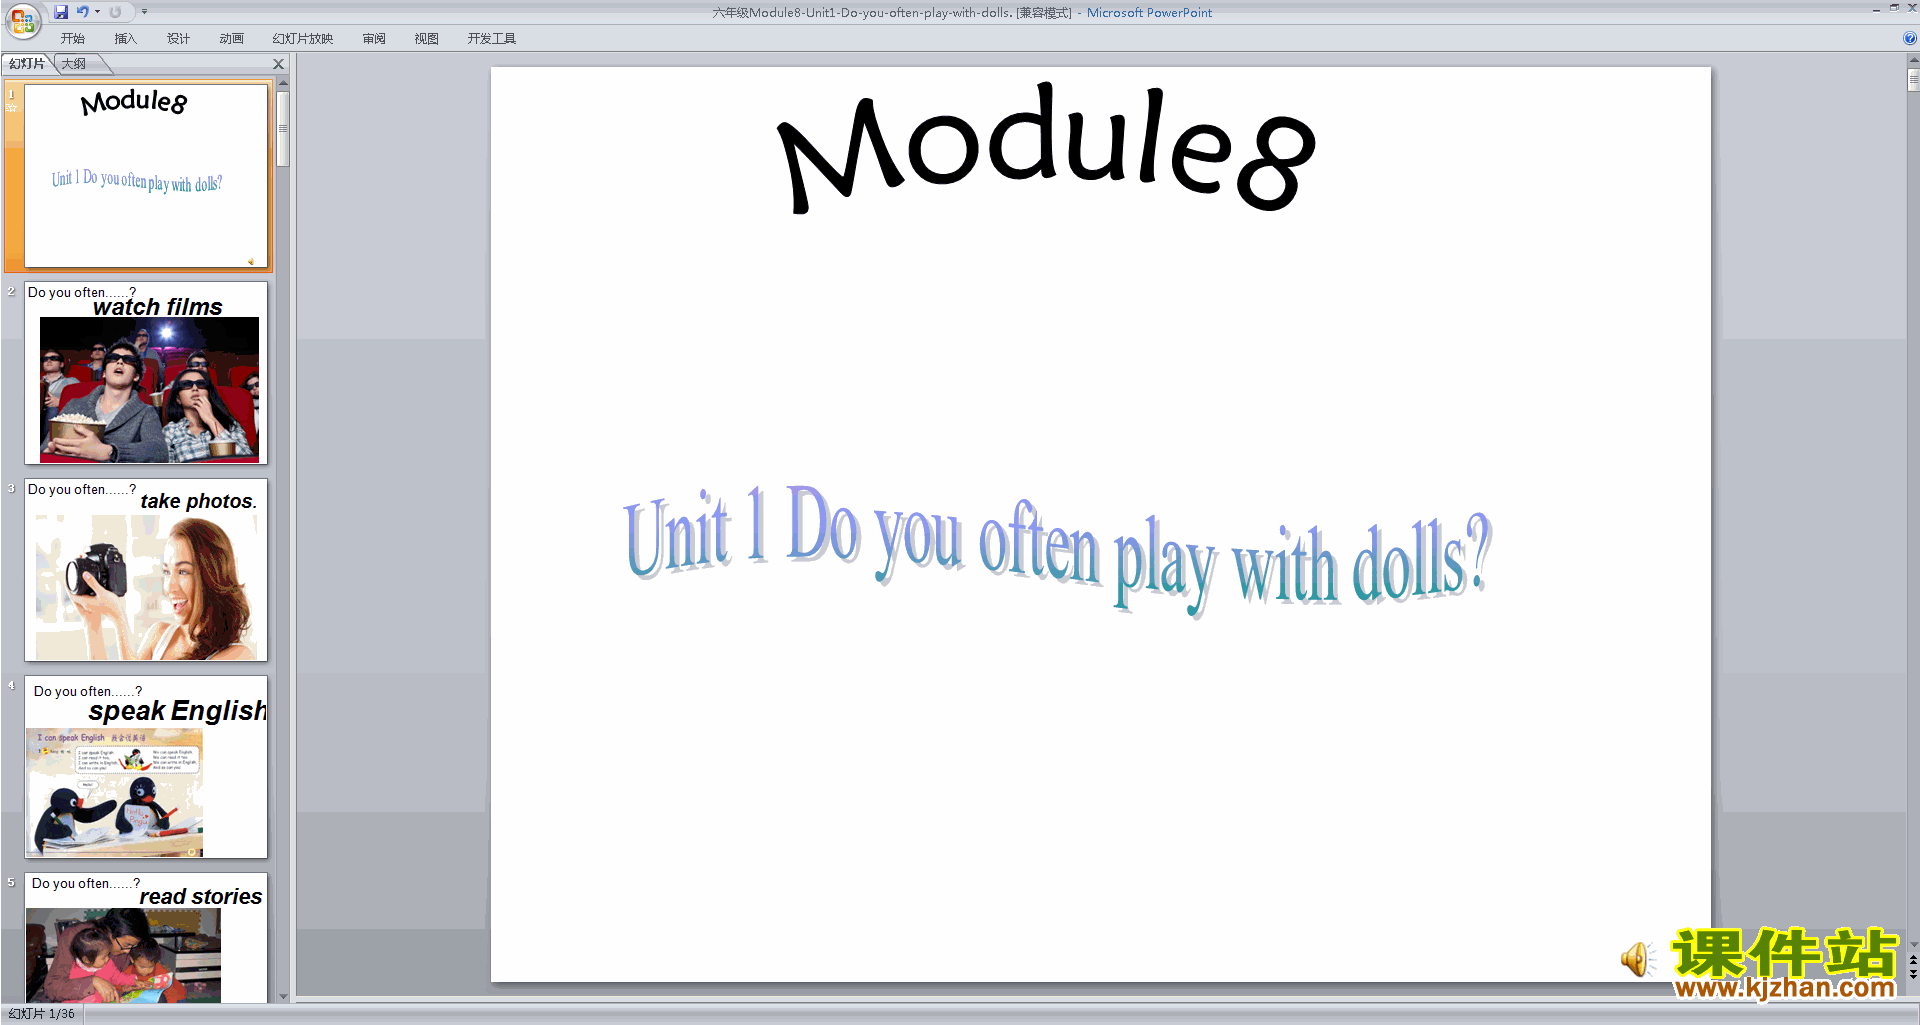 пModule8 Unit1 Do you often play with dollspptμ1